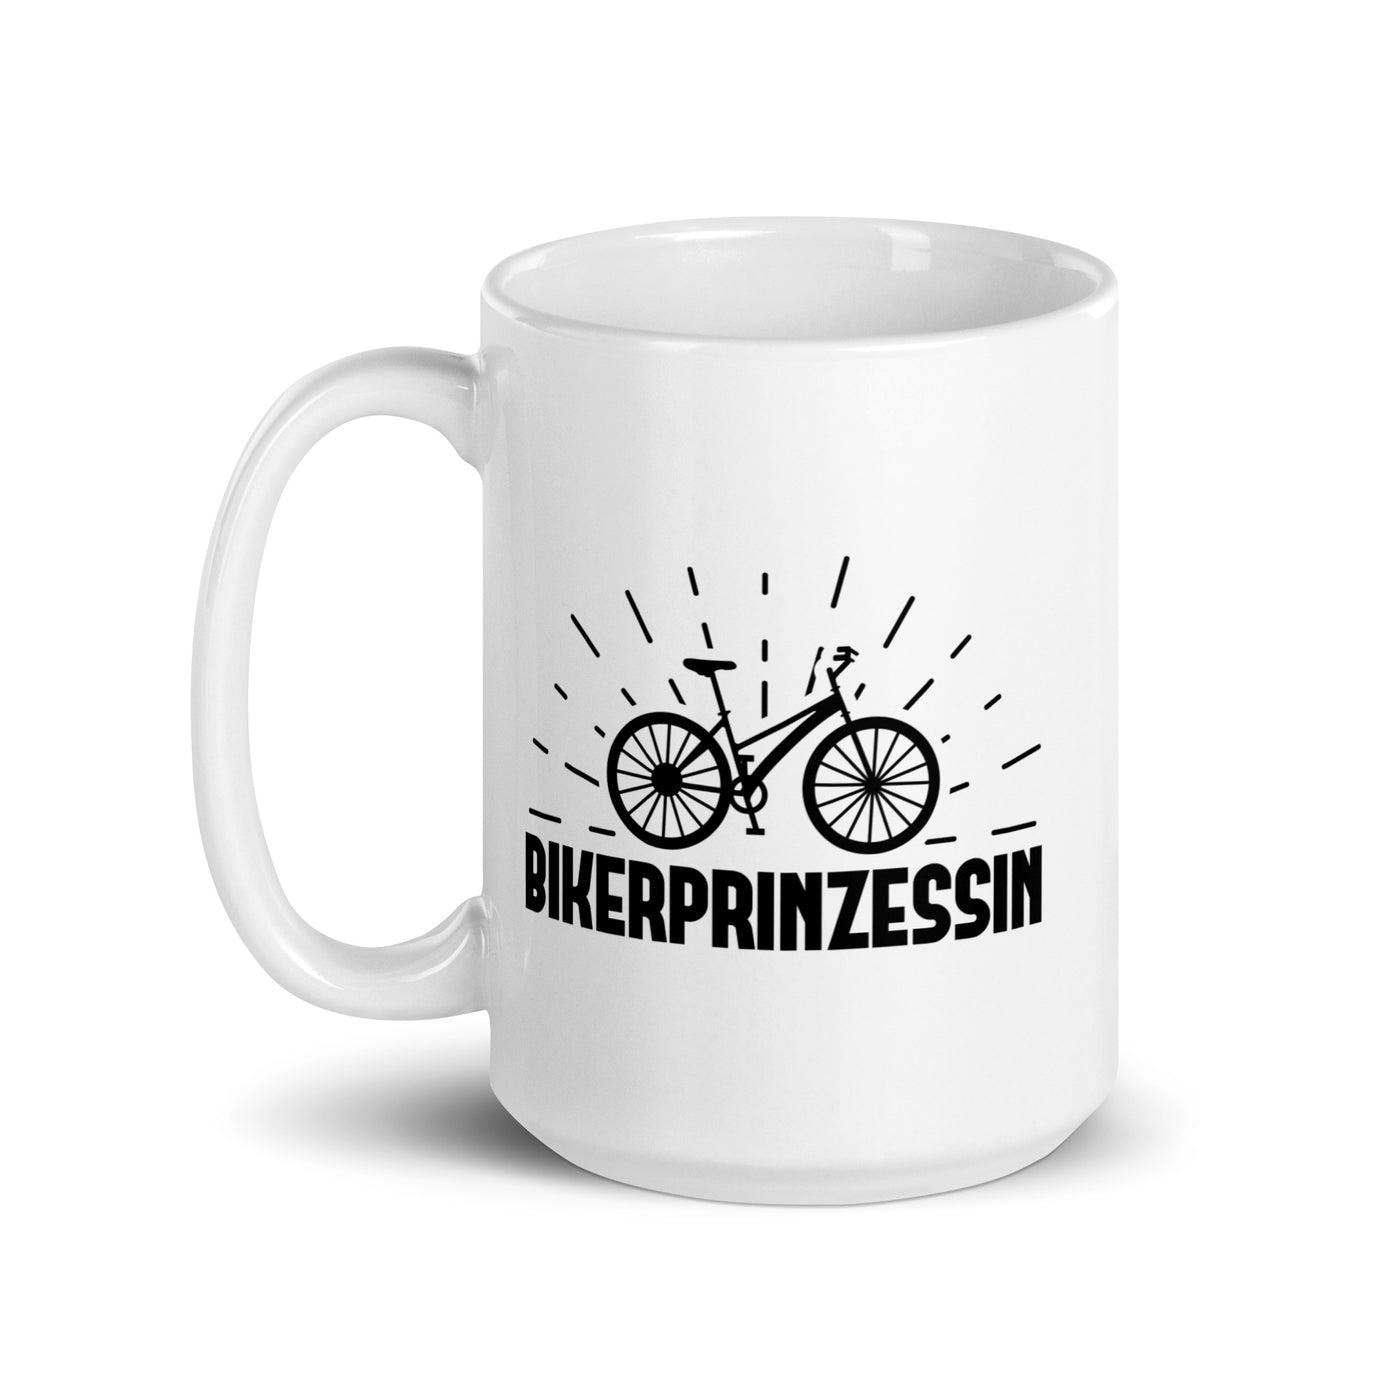 Bikerprinzessin - Tasse fahrrad